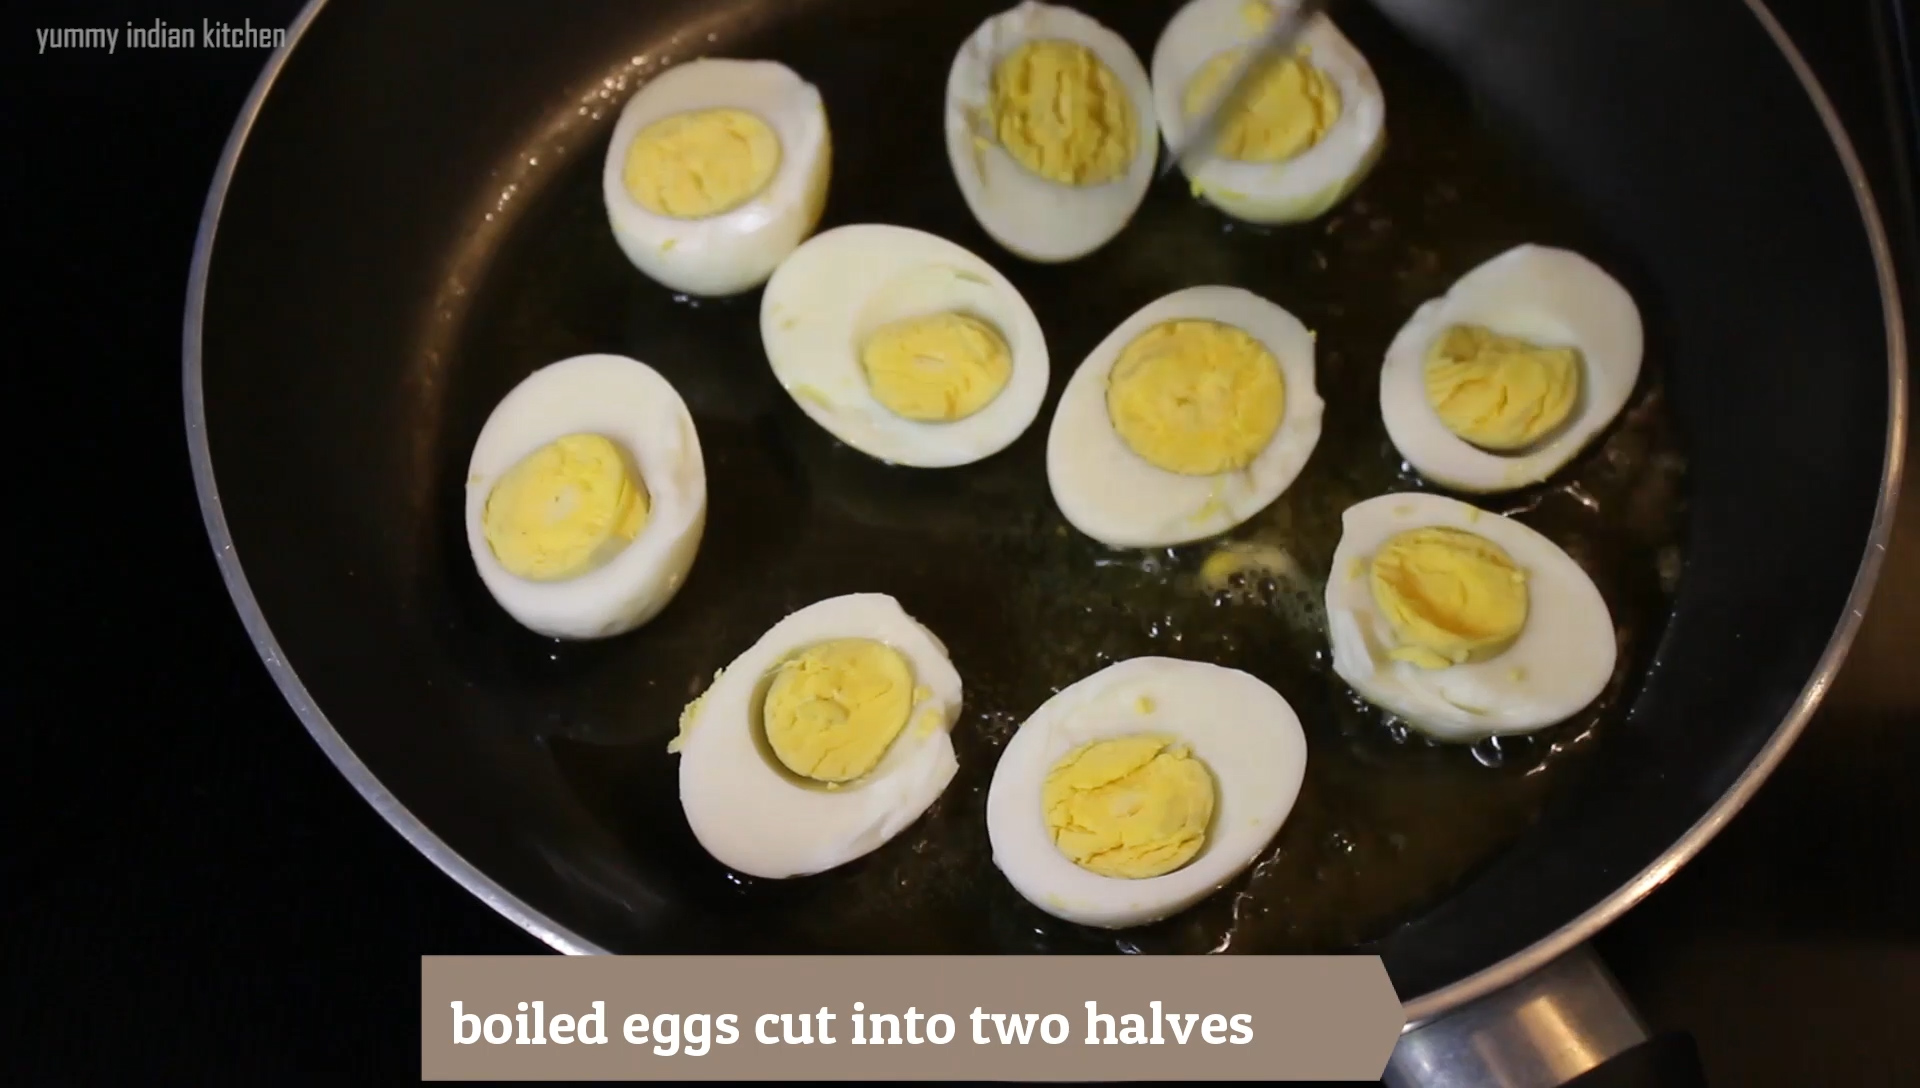 stir fried the boiled eggs cut into halves